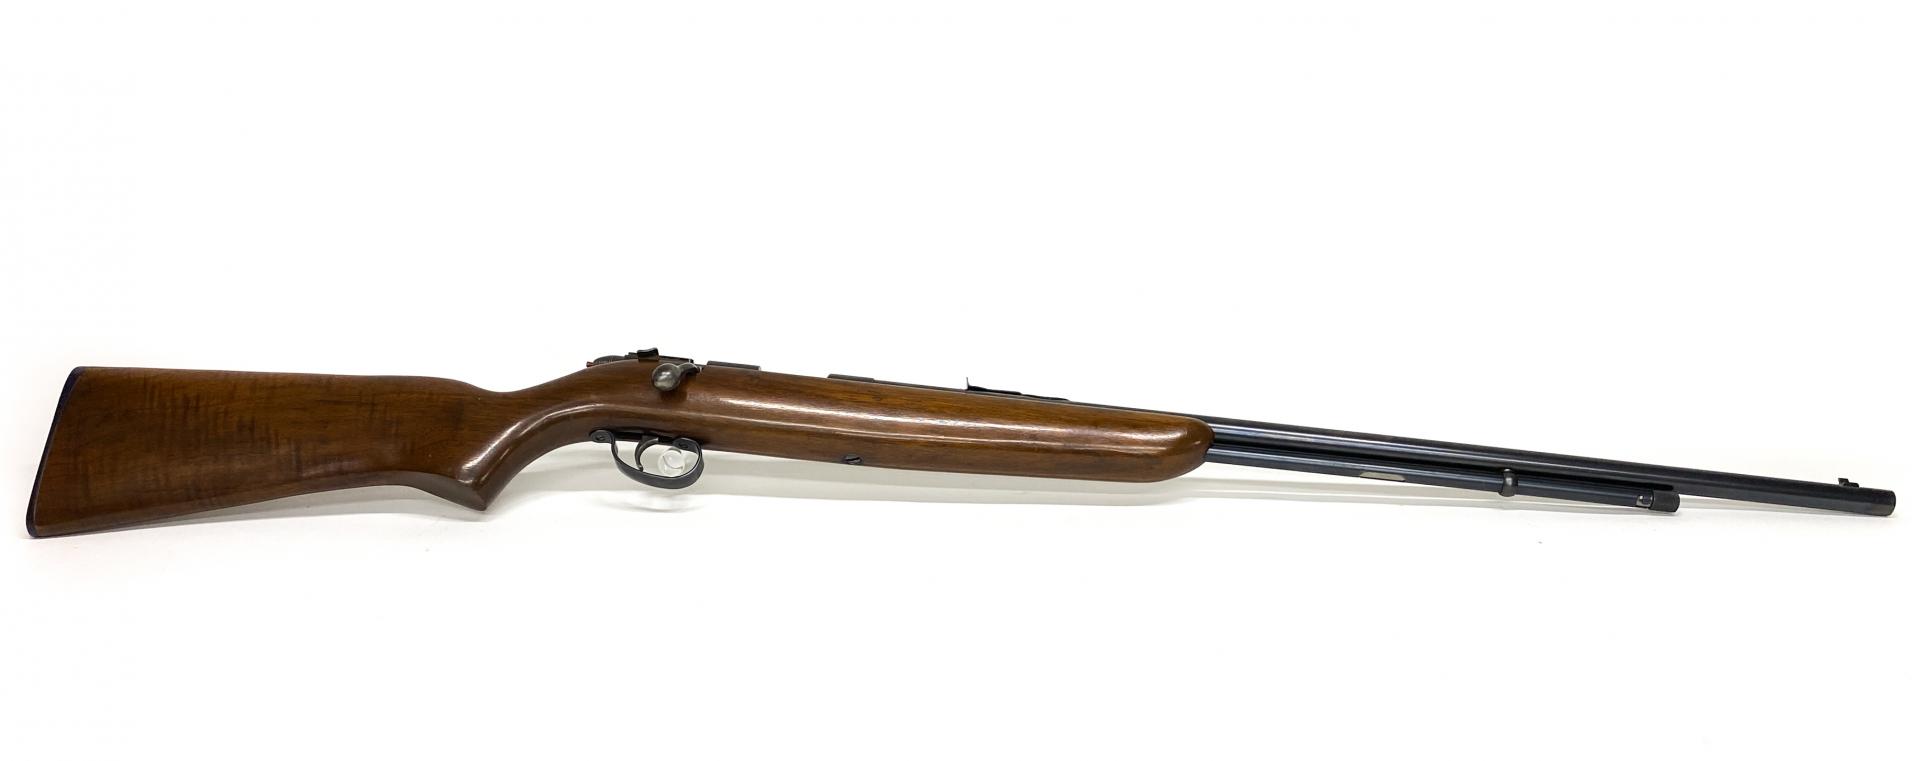 USED Remington Model 512 Sportmaster 22LR Model 512 FREM85429 Long gun - Arms